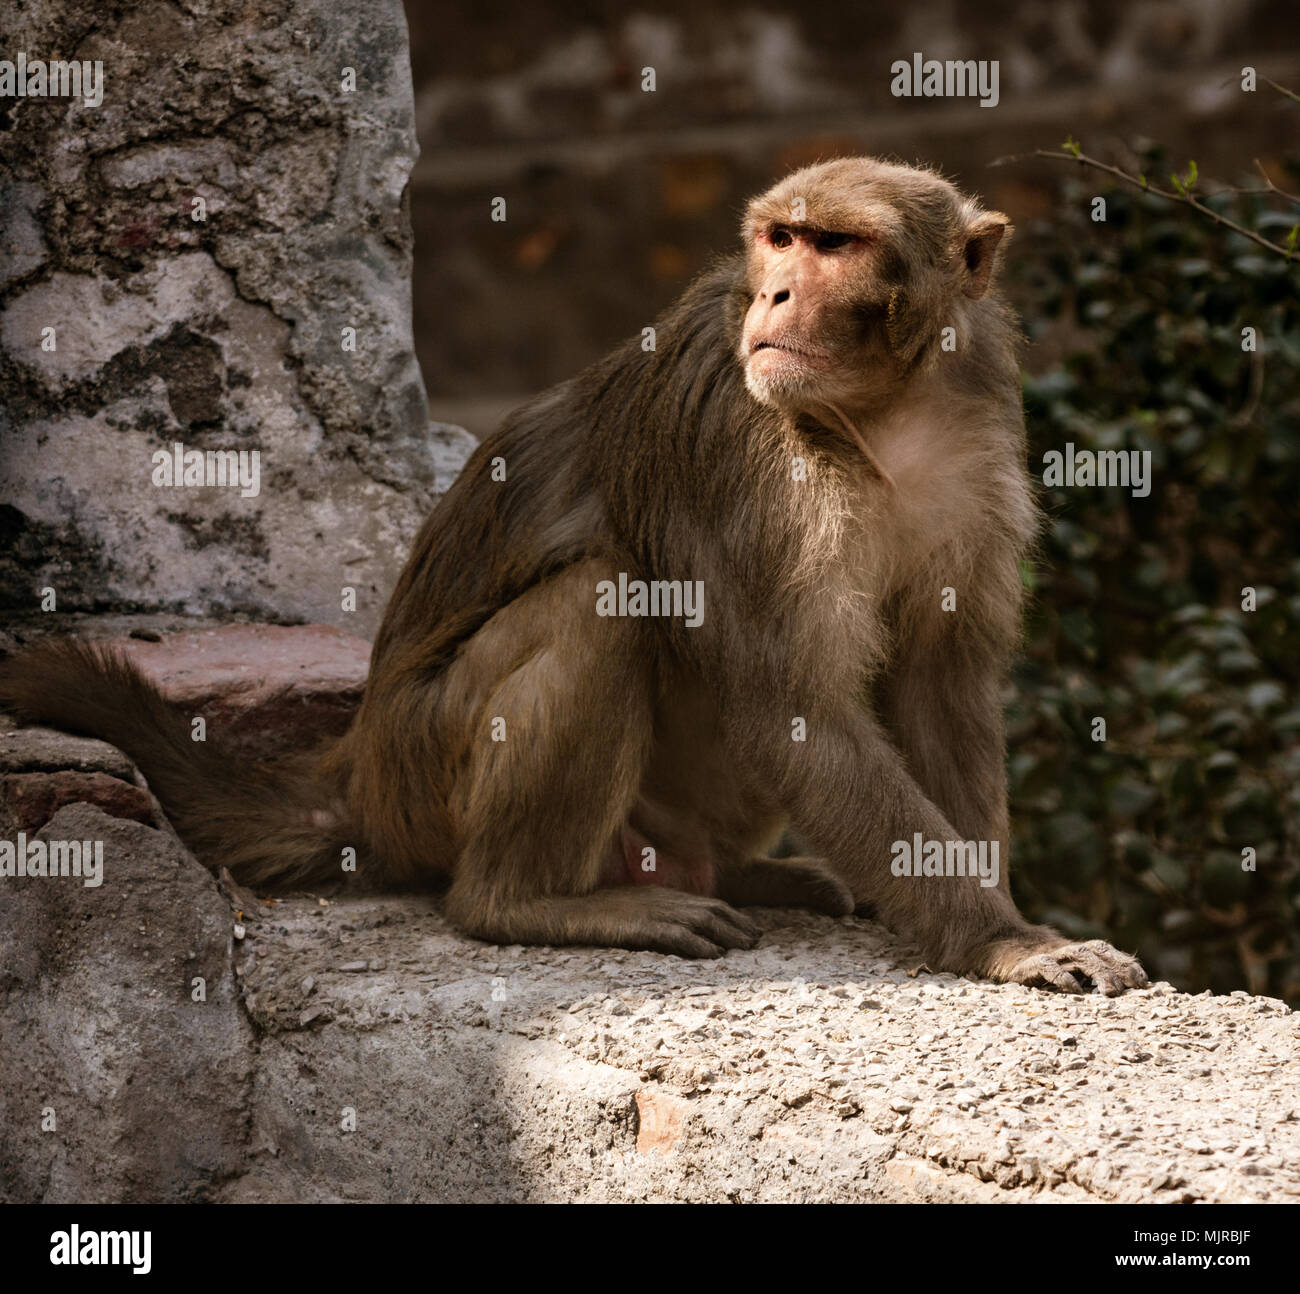 Urban Monkey: Urban Monkey - Summer Collection 2018